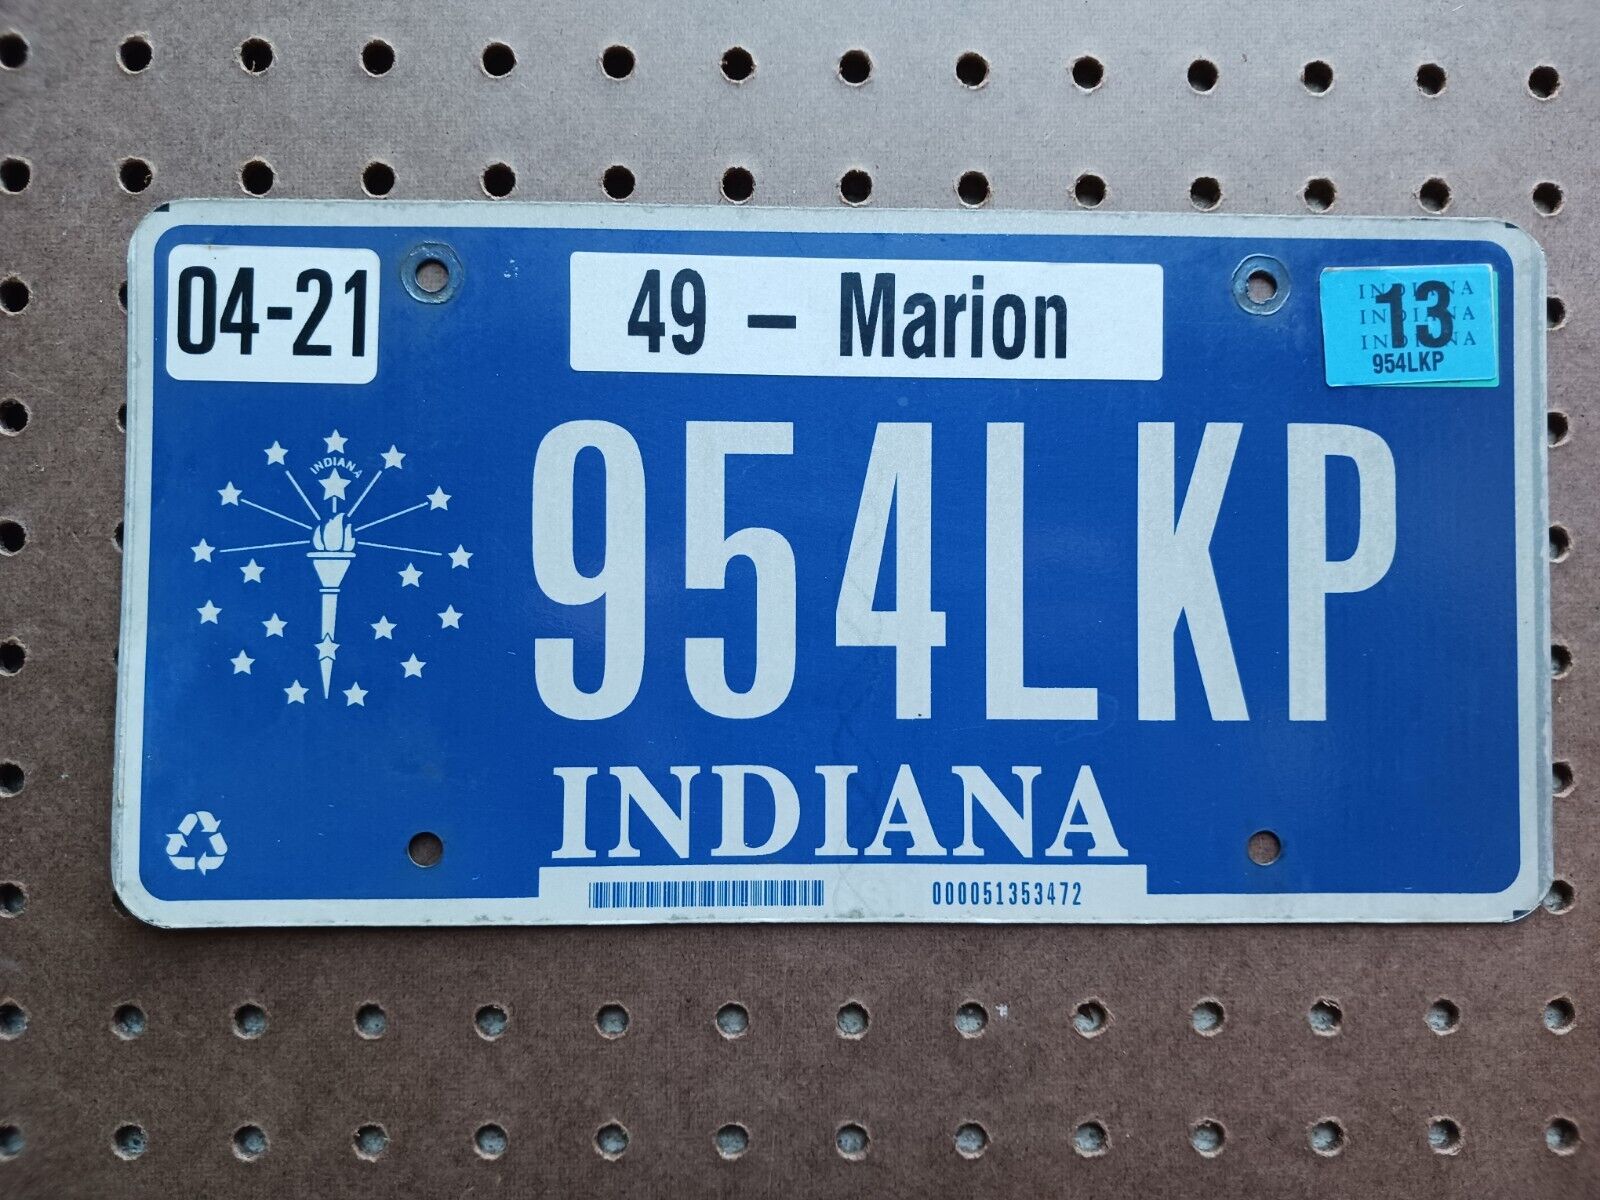 2013 Indiana Auto Car Truck License Plate 954LKP